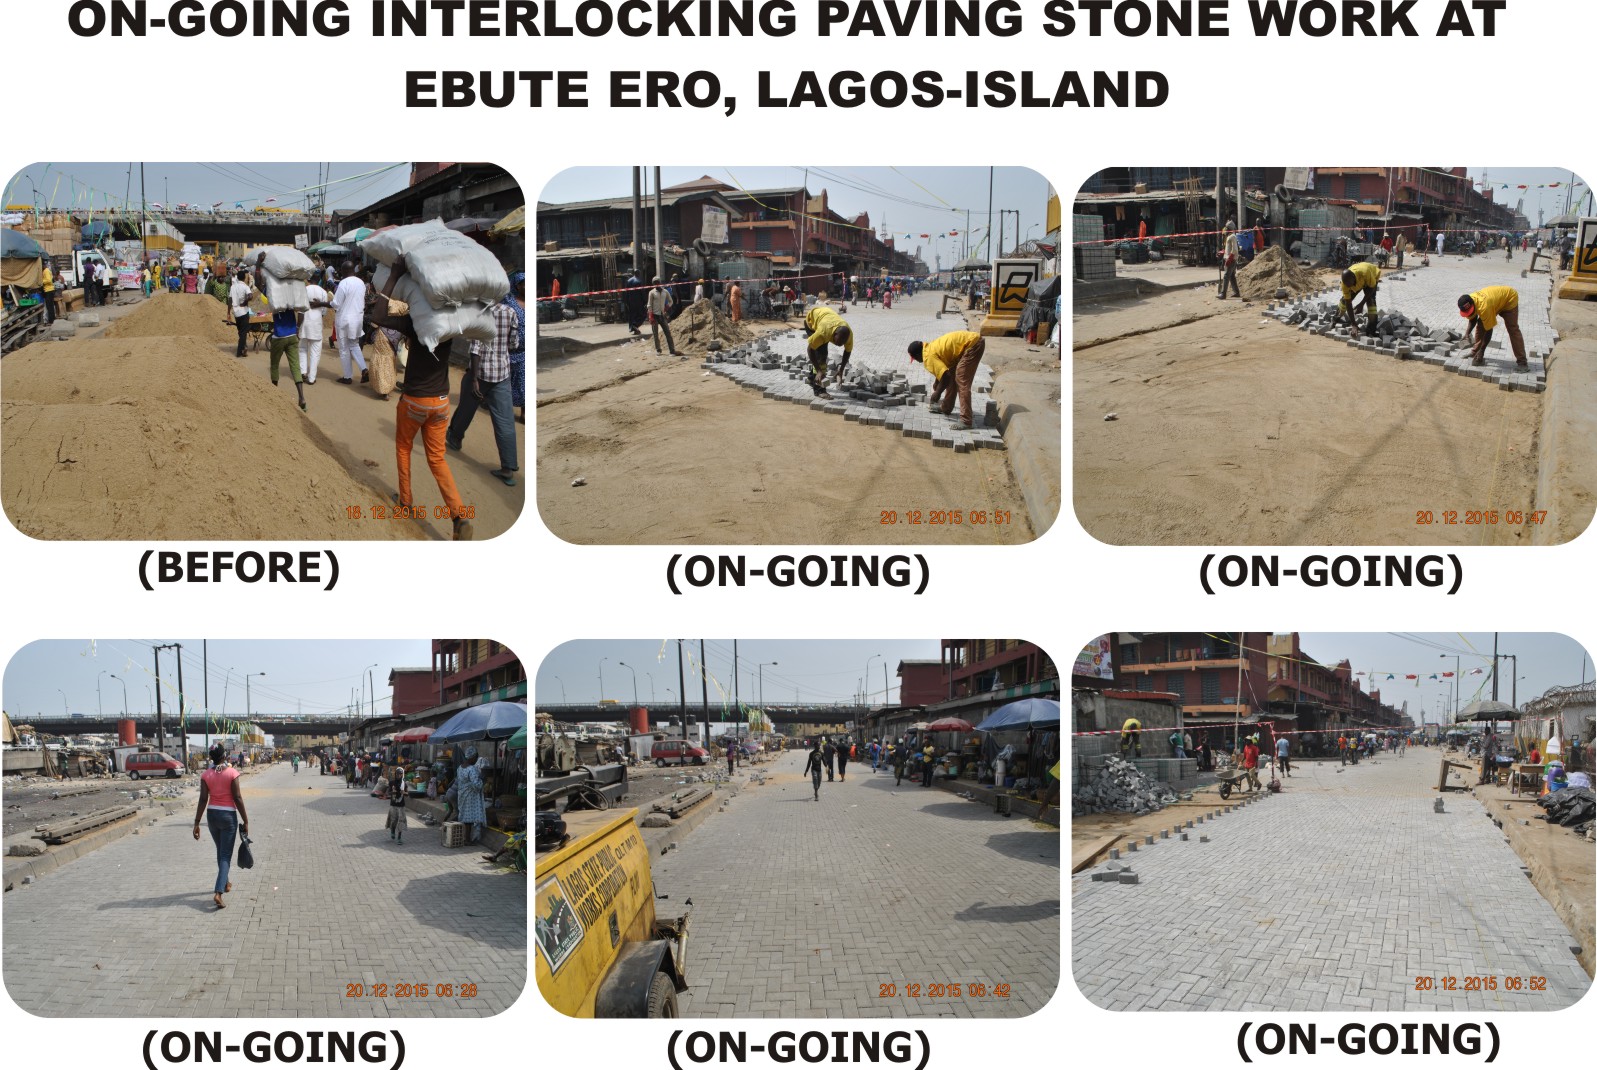 ON-GOING INTERLOCKING PAVING STONE WORK AT EBUTE ERO, LAGOS ISLAND